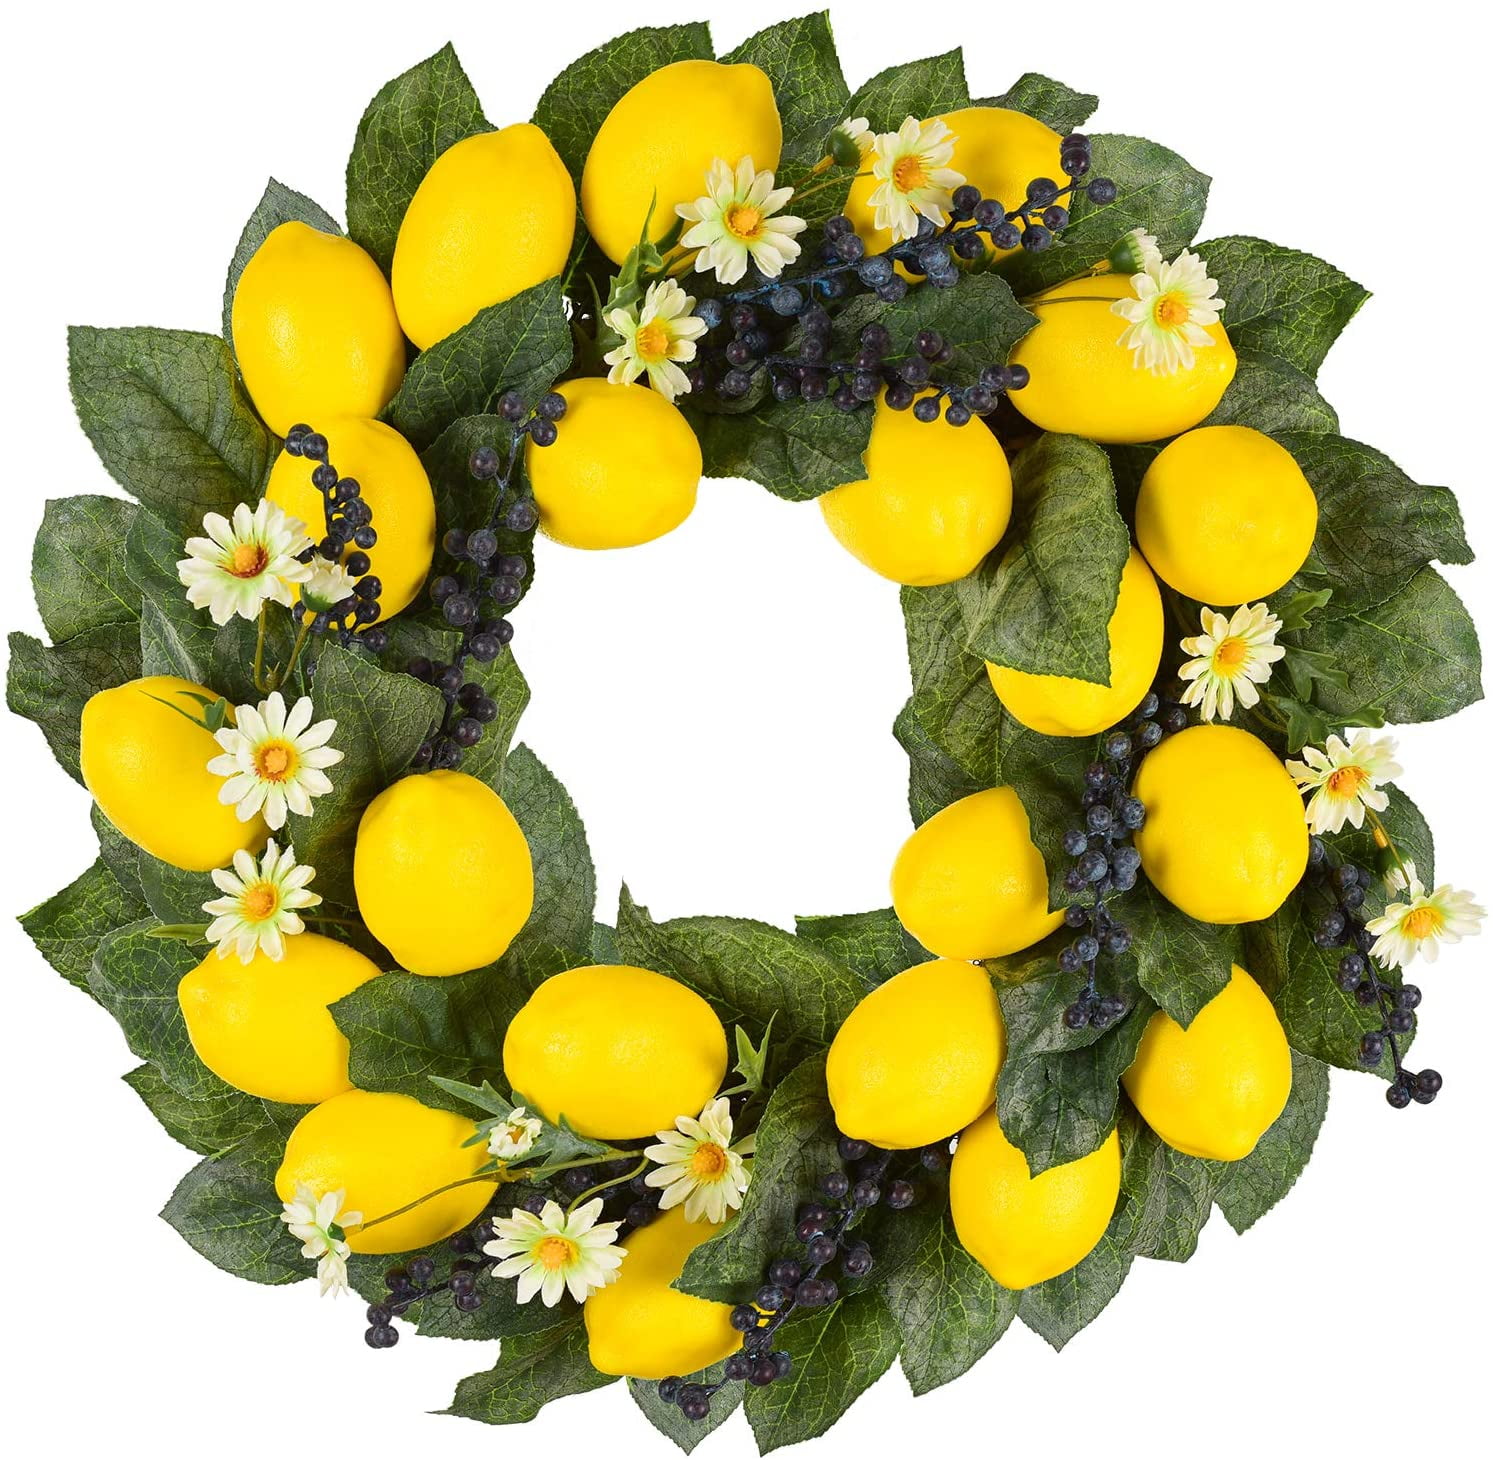 18" Decorative Spring Wreath w/Artificial Lemons Blueberries & Daisy Flowers 